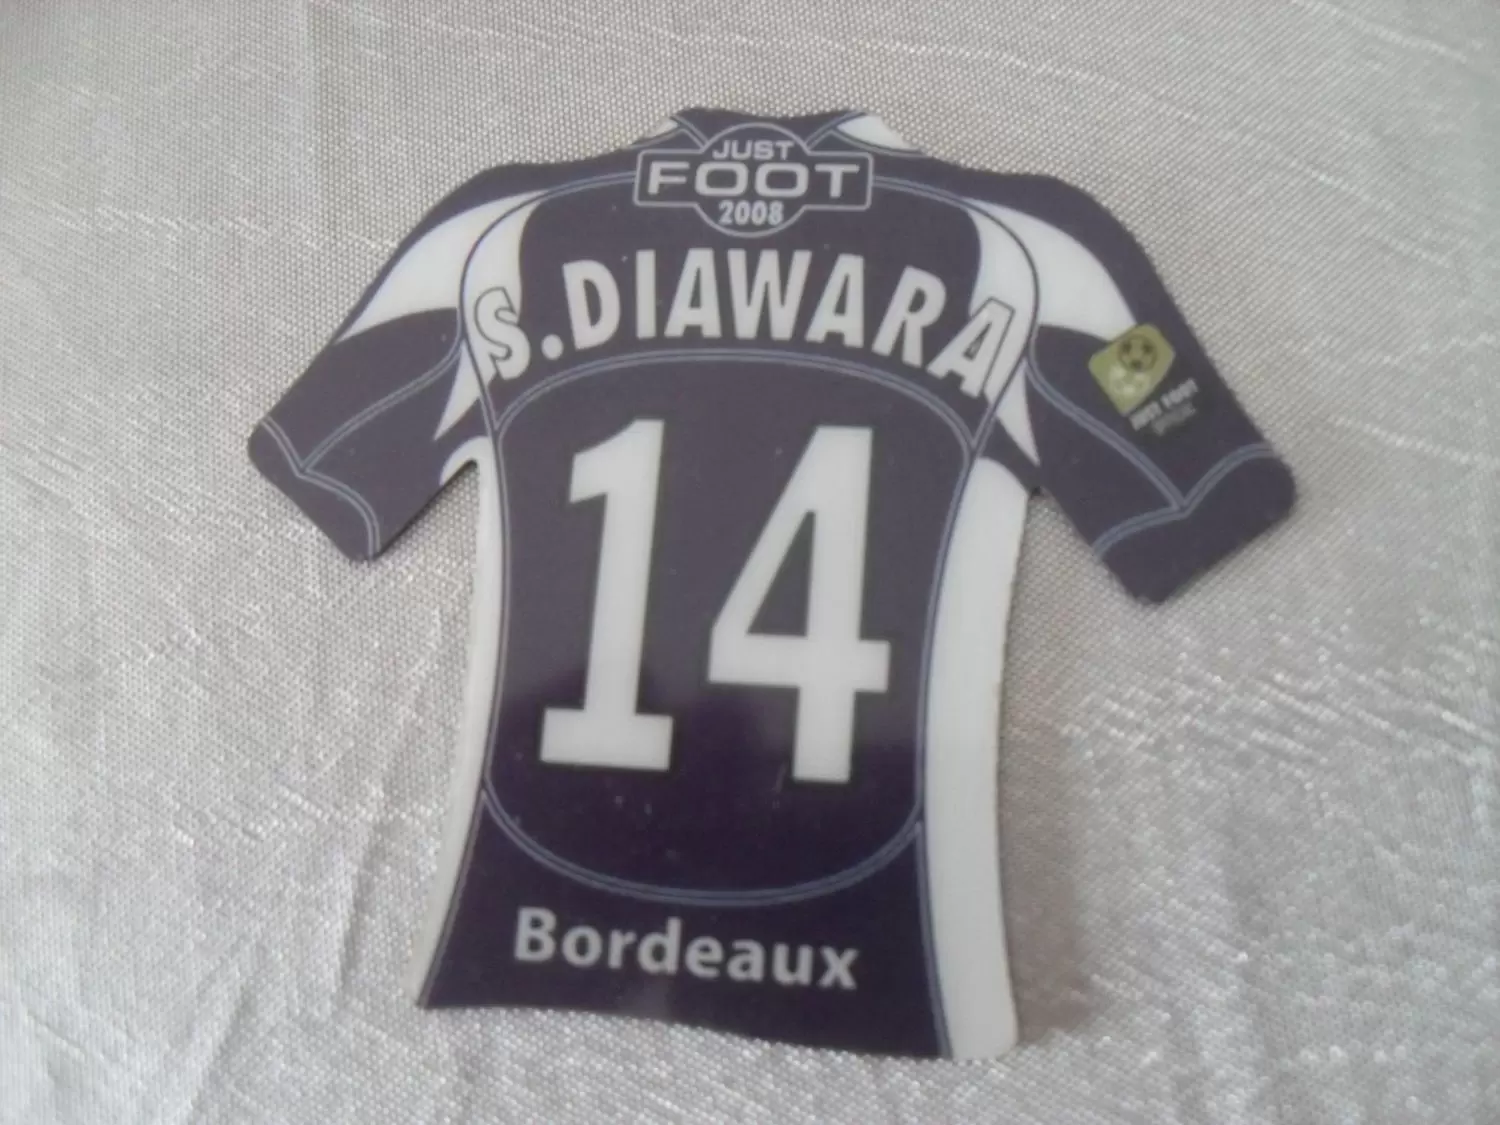 Just Foot 2008 - Bordeaux 14 - S. Diawara